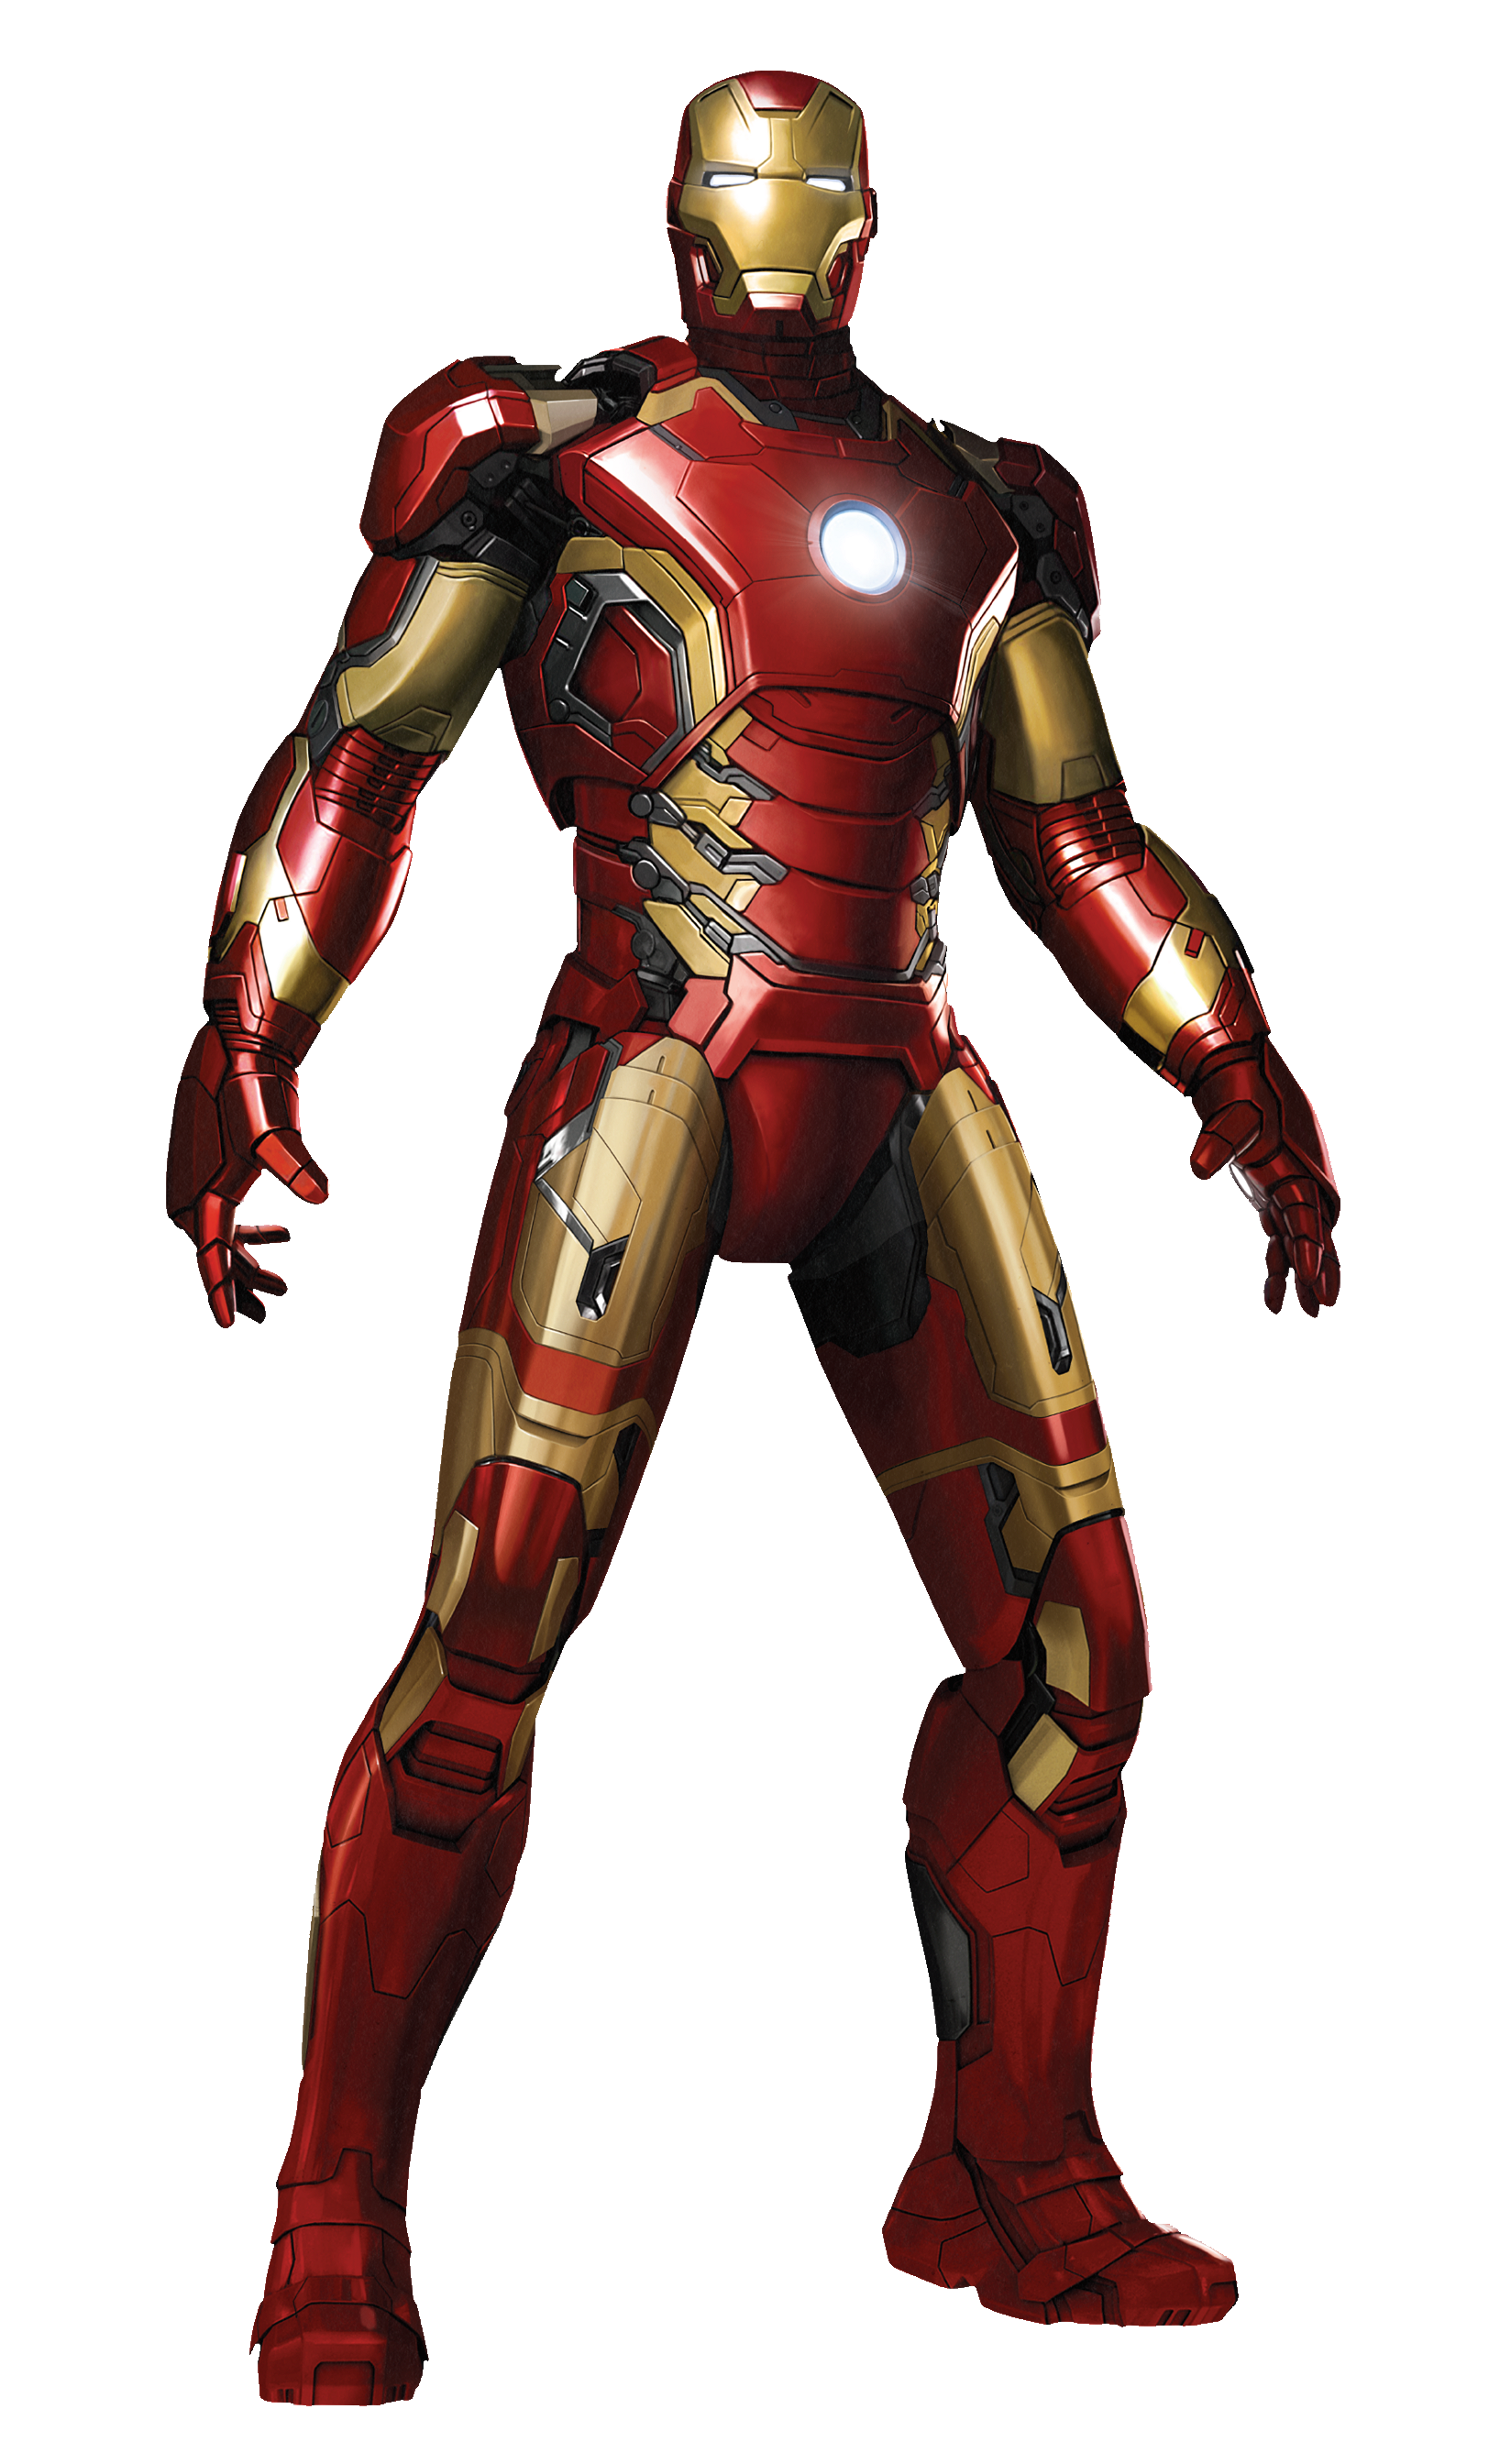 Iron Man's armor - Wikipedia